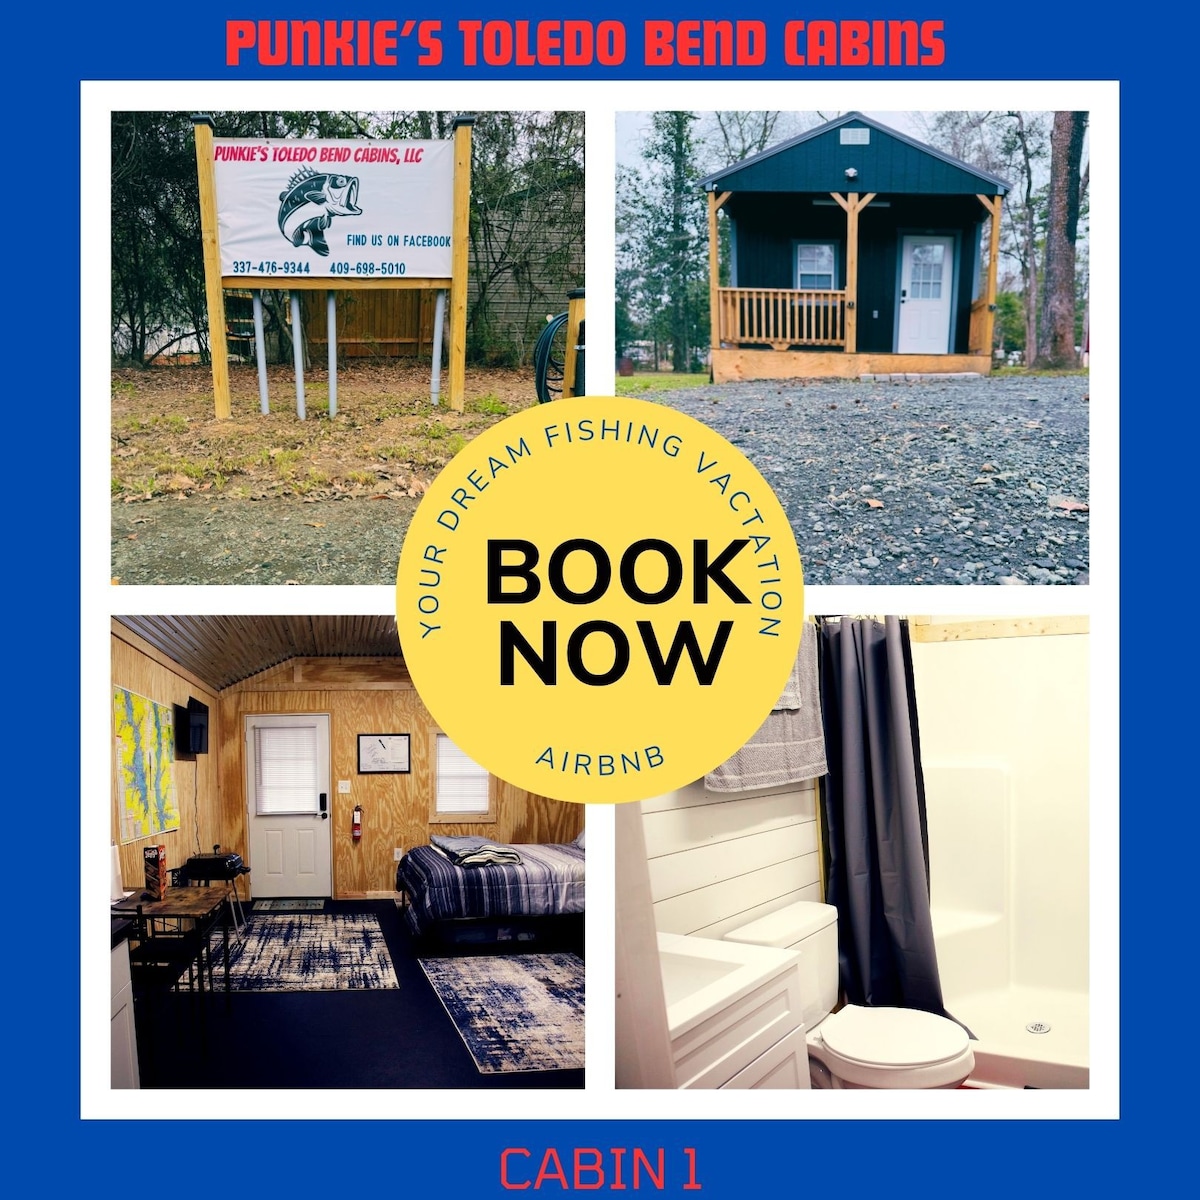 Punkie's Toledo Bend Cabins (Black)